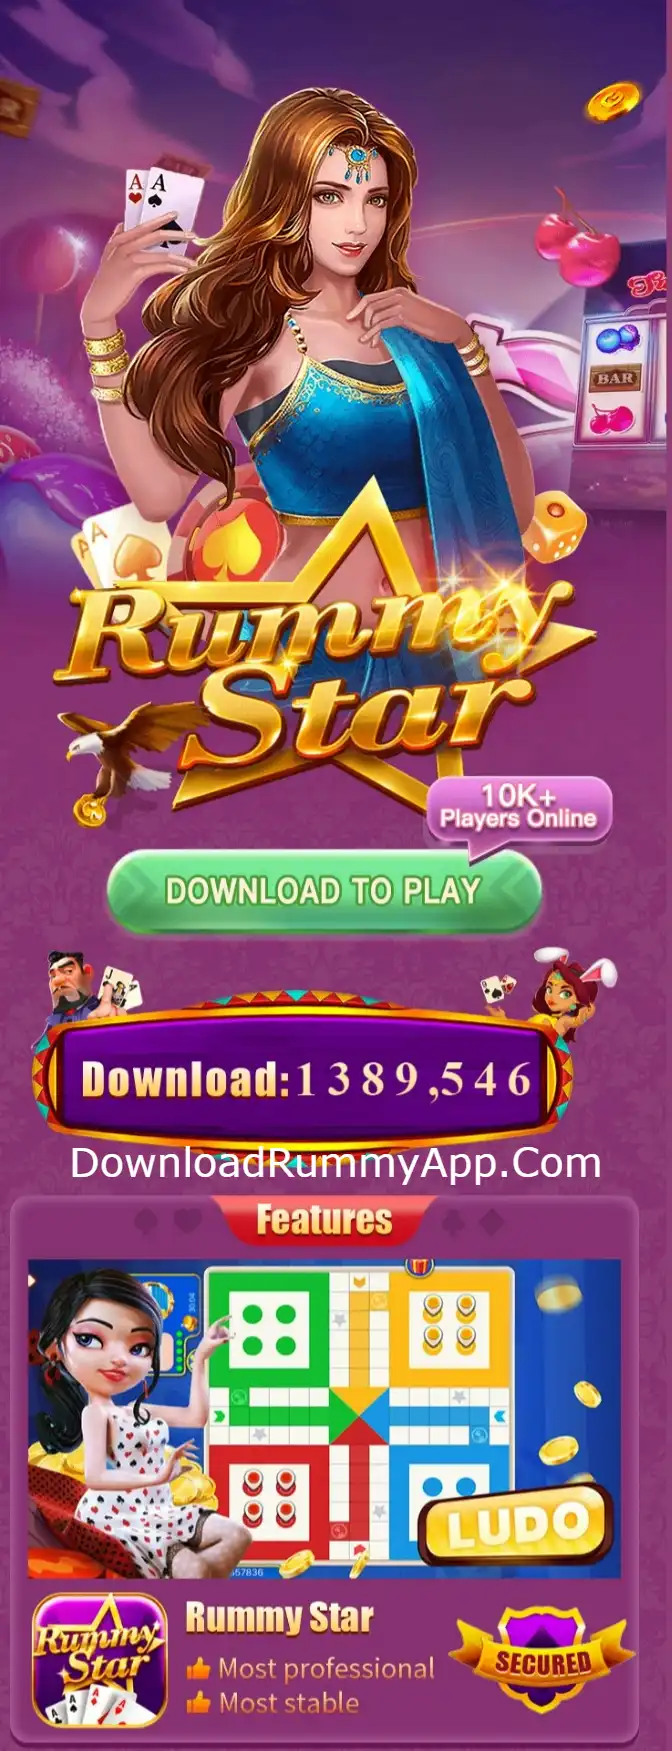 Rummy-Star-App-Download